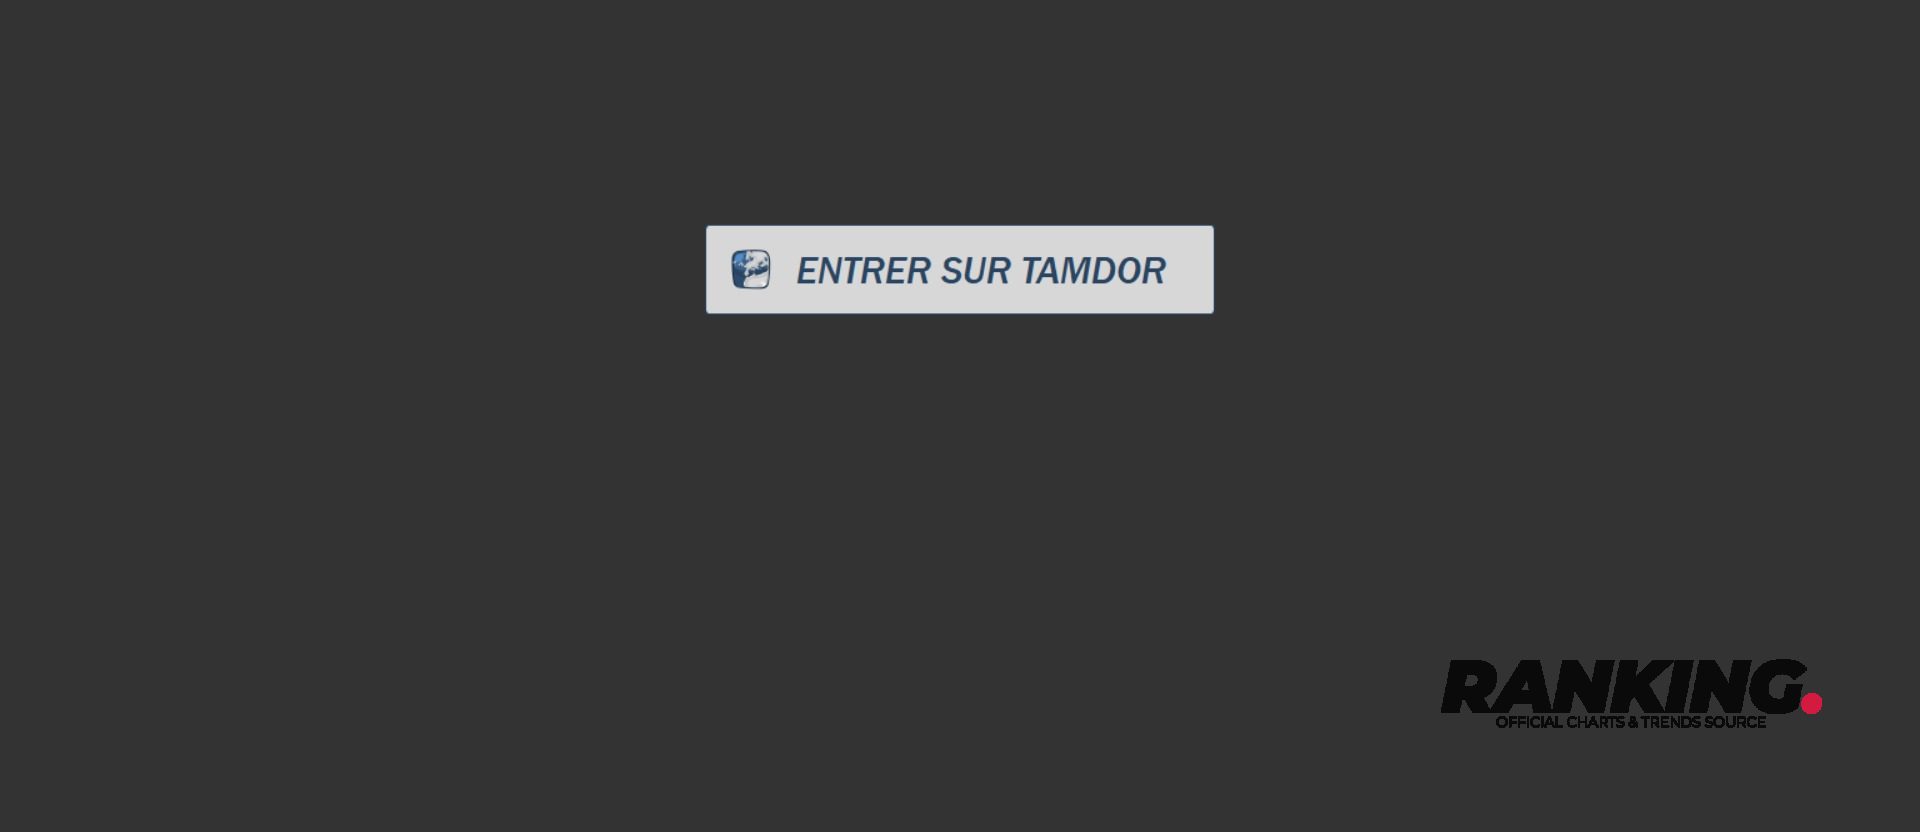 Tamdor tamdor.com site de streaming gratuit 2021